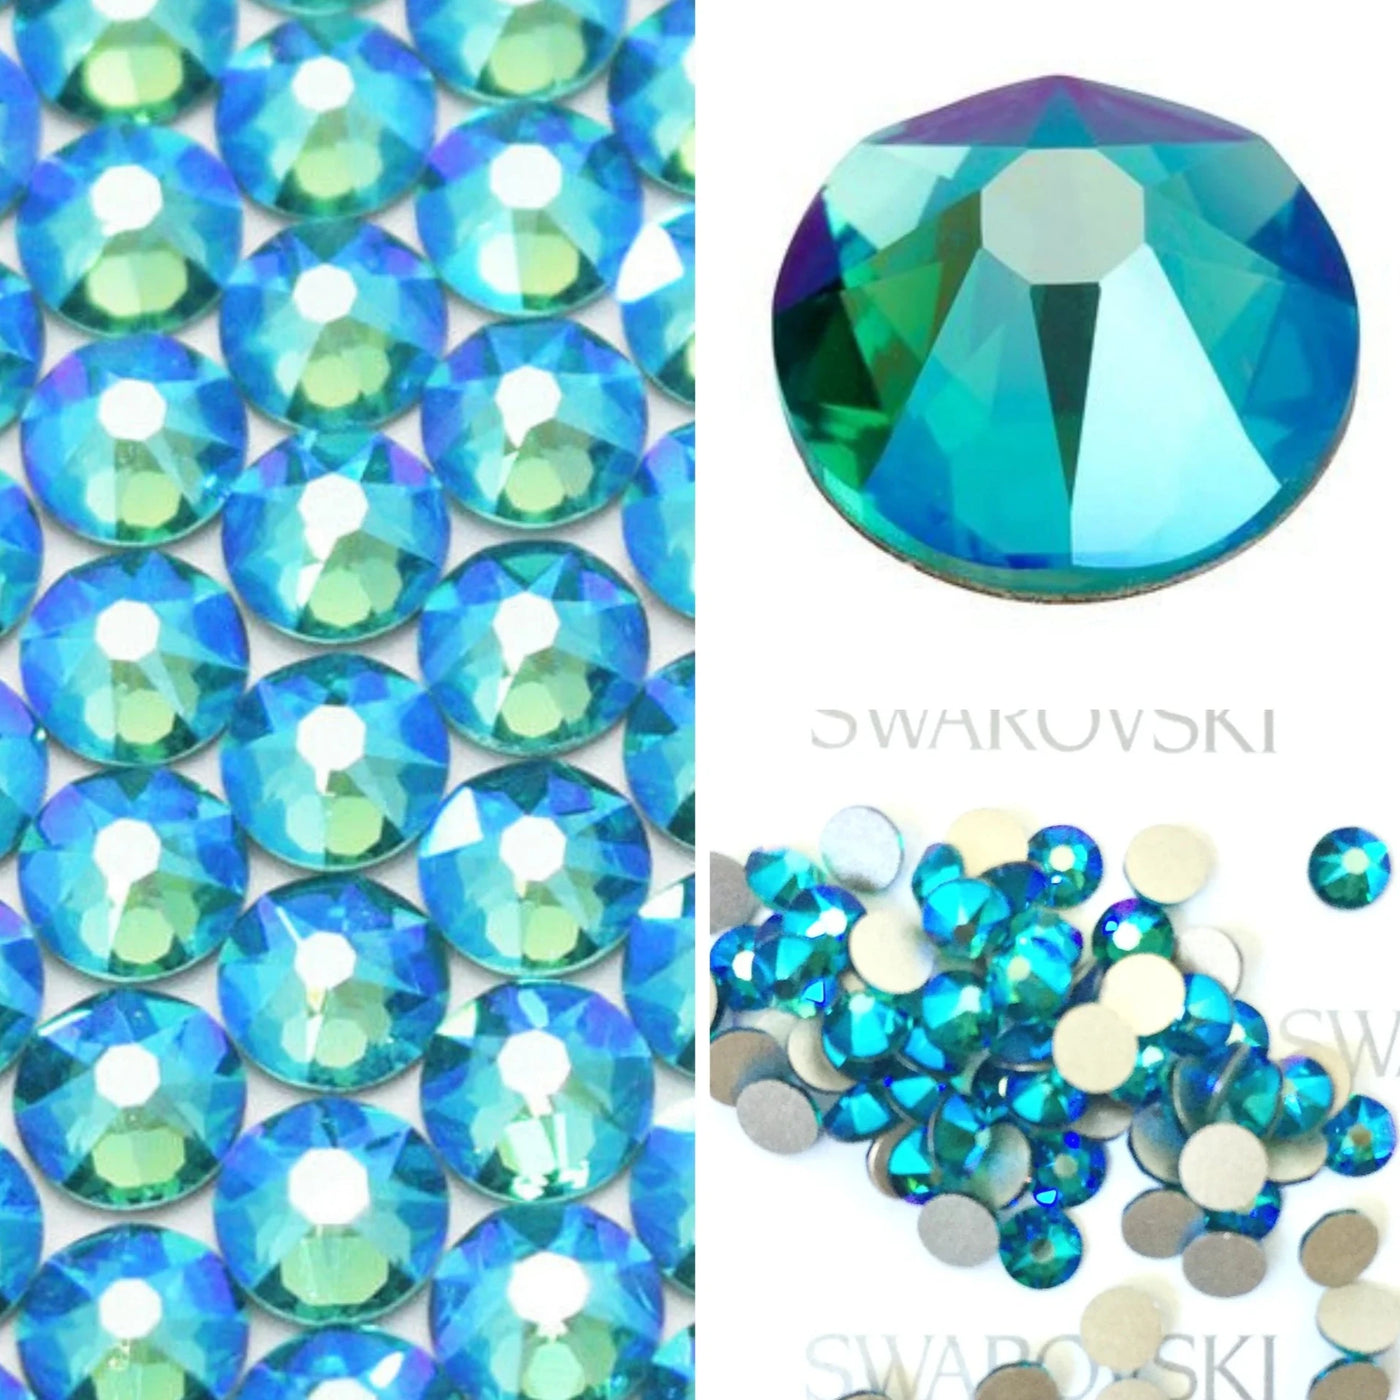 Swarovski Tooth Gems - GODDESS BLUE ZURCON SHIMMER 229